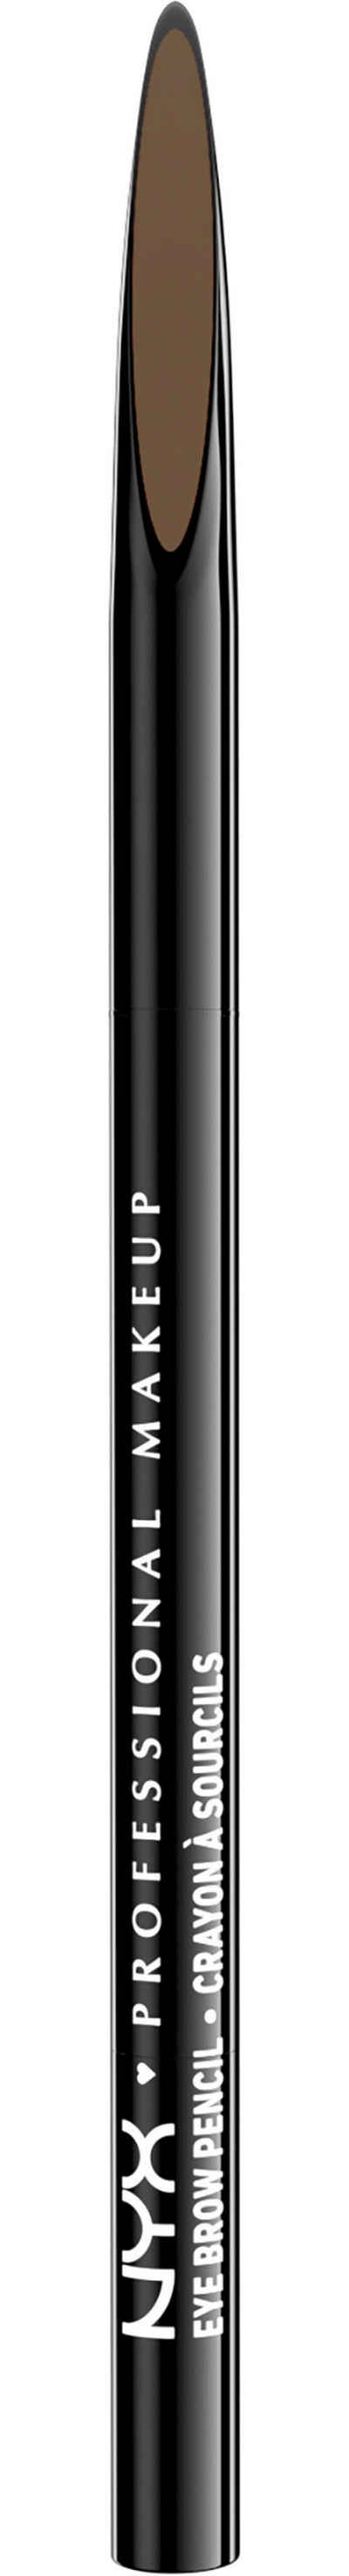 NYX Augenbrauen-Stift Professional Makeup Precision Brow Pencil